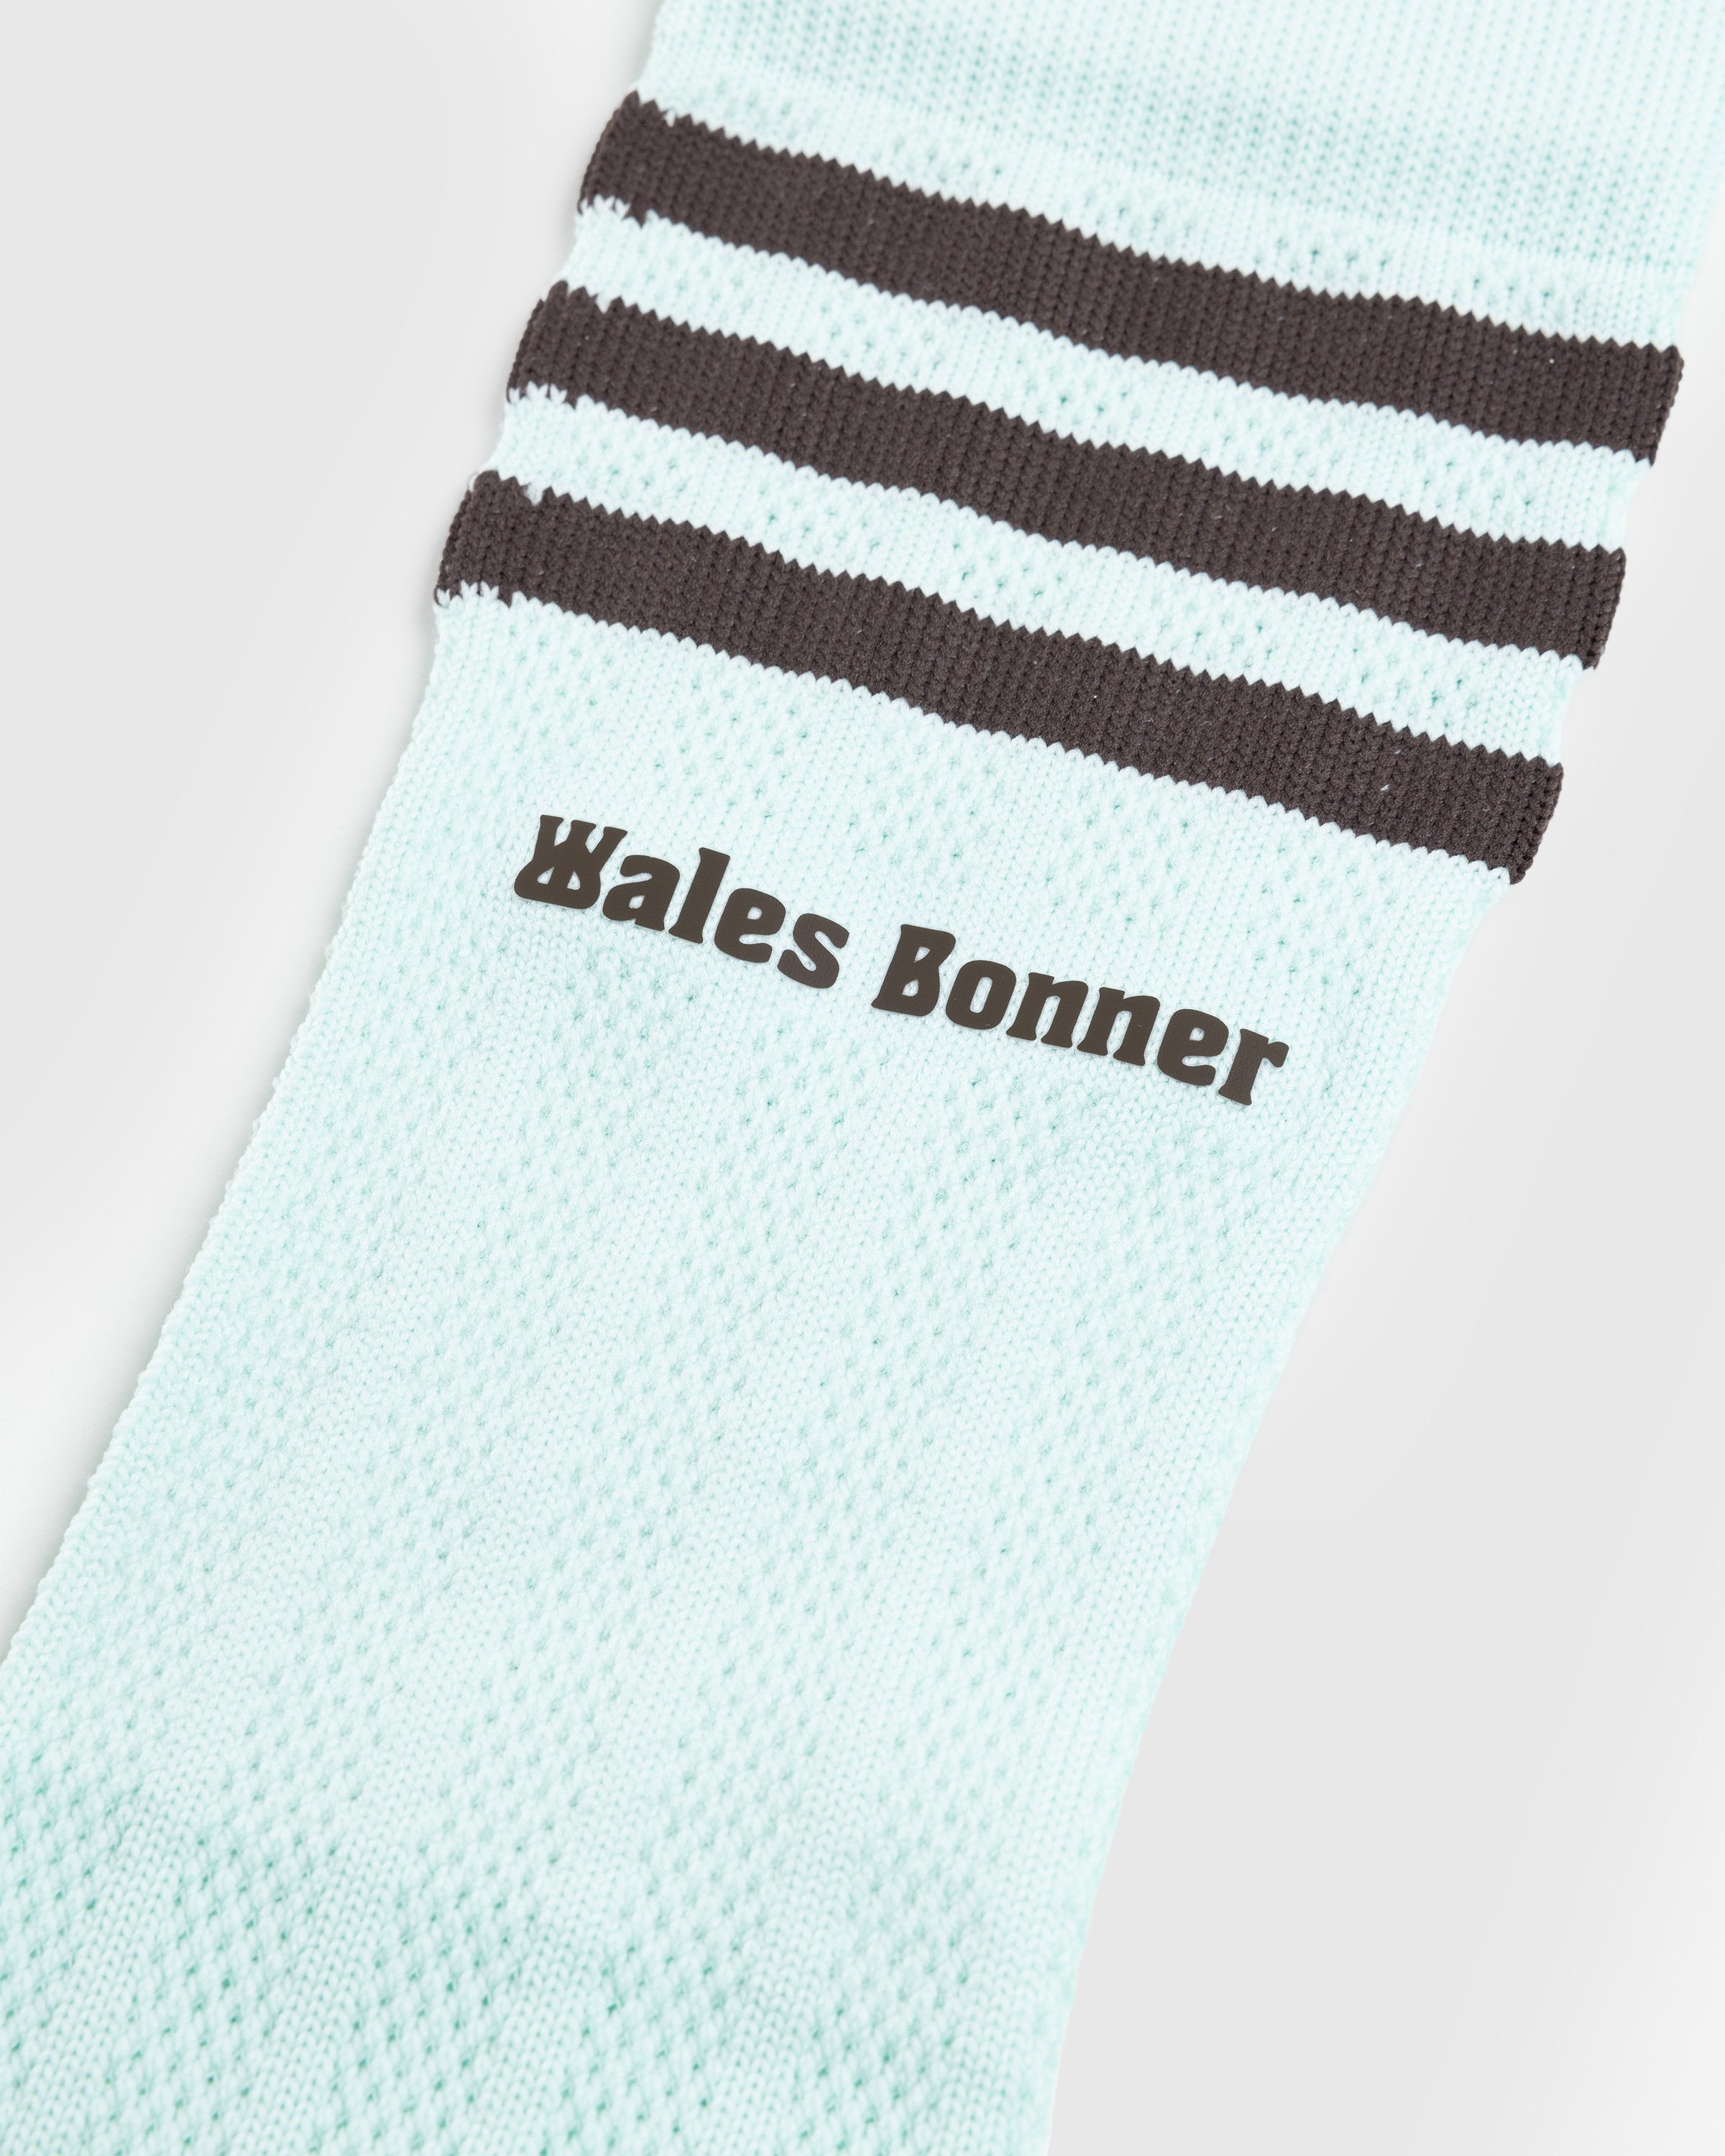 Adidas x Wales Bonner - Crochet Socks Three-Pack Multi - Accessories - Multi - Image 5